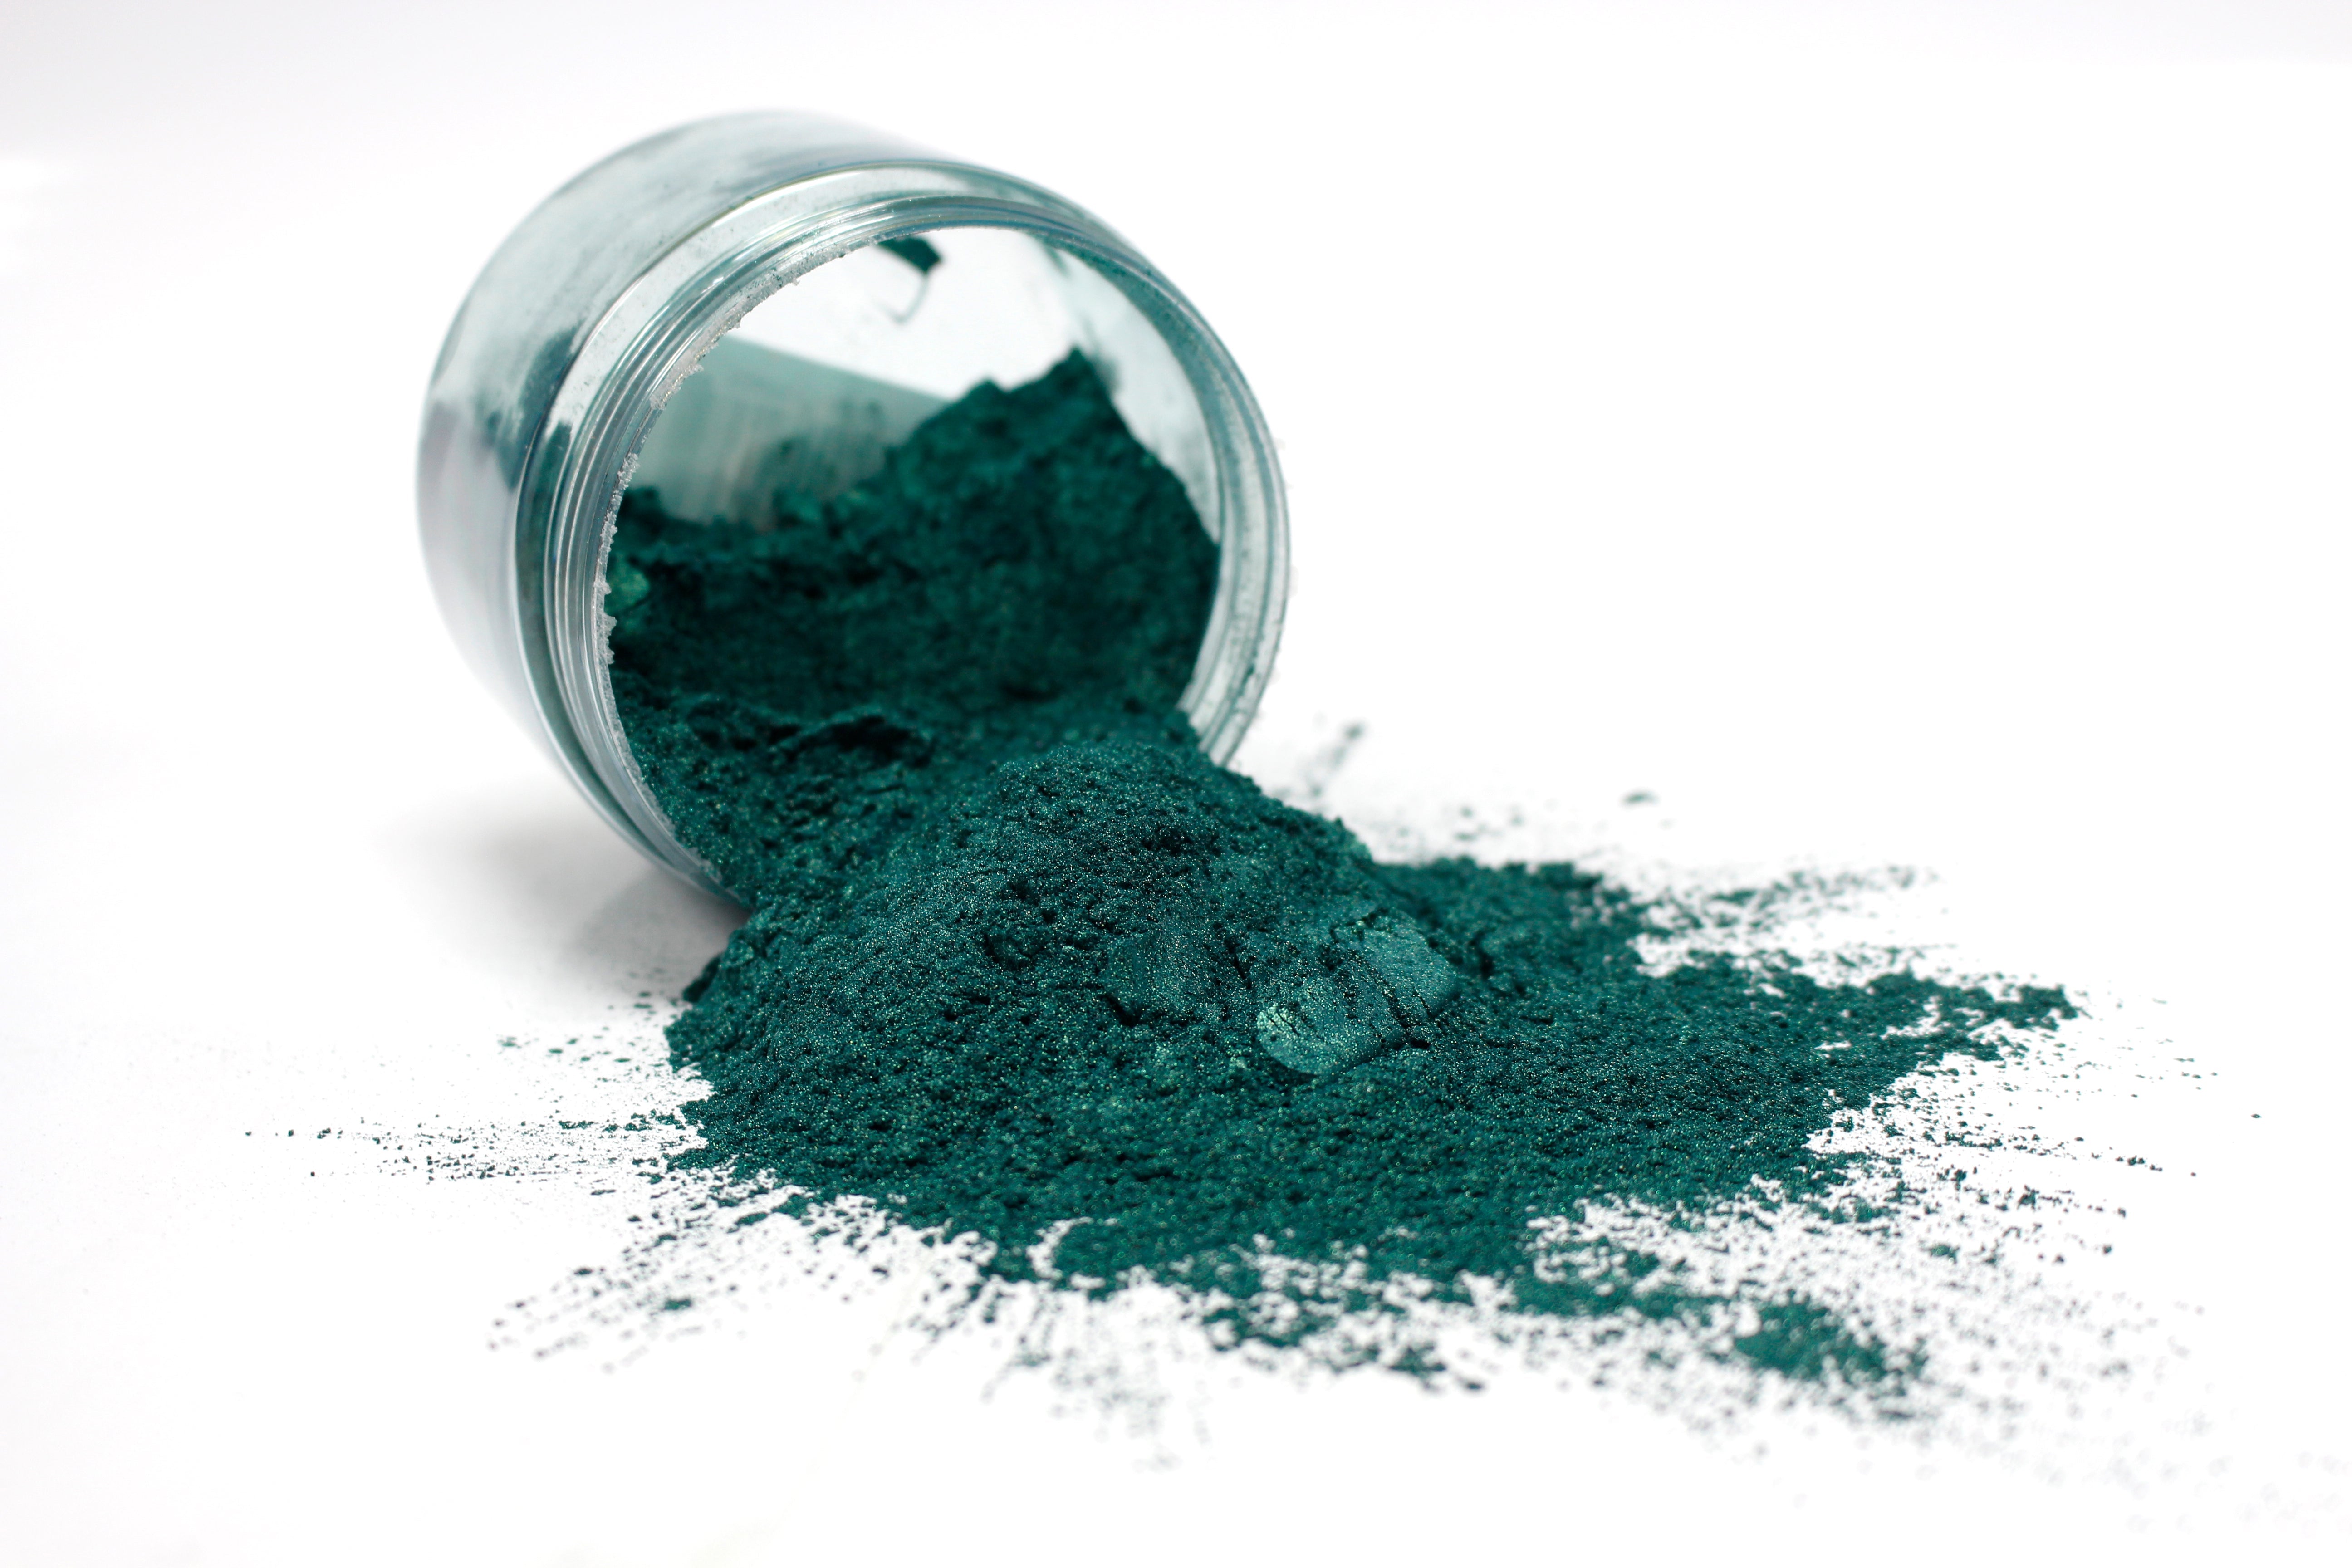 21 Colors Epoxy Resin Dye Mica Powder Powdered Pigments Set Resin